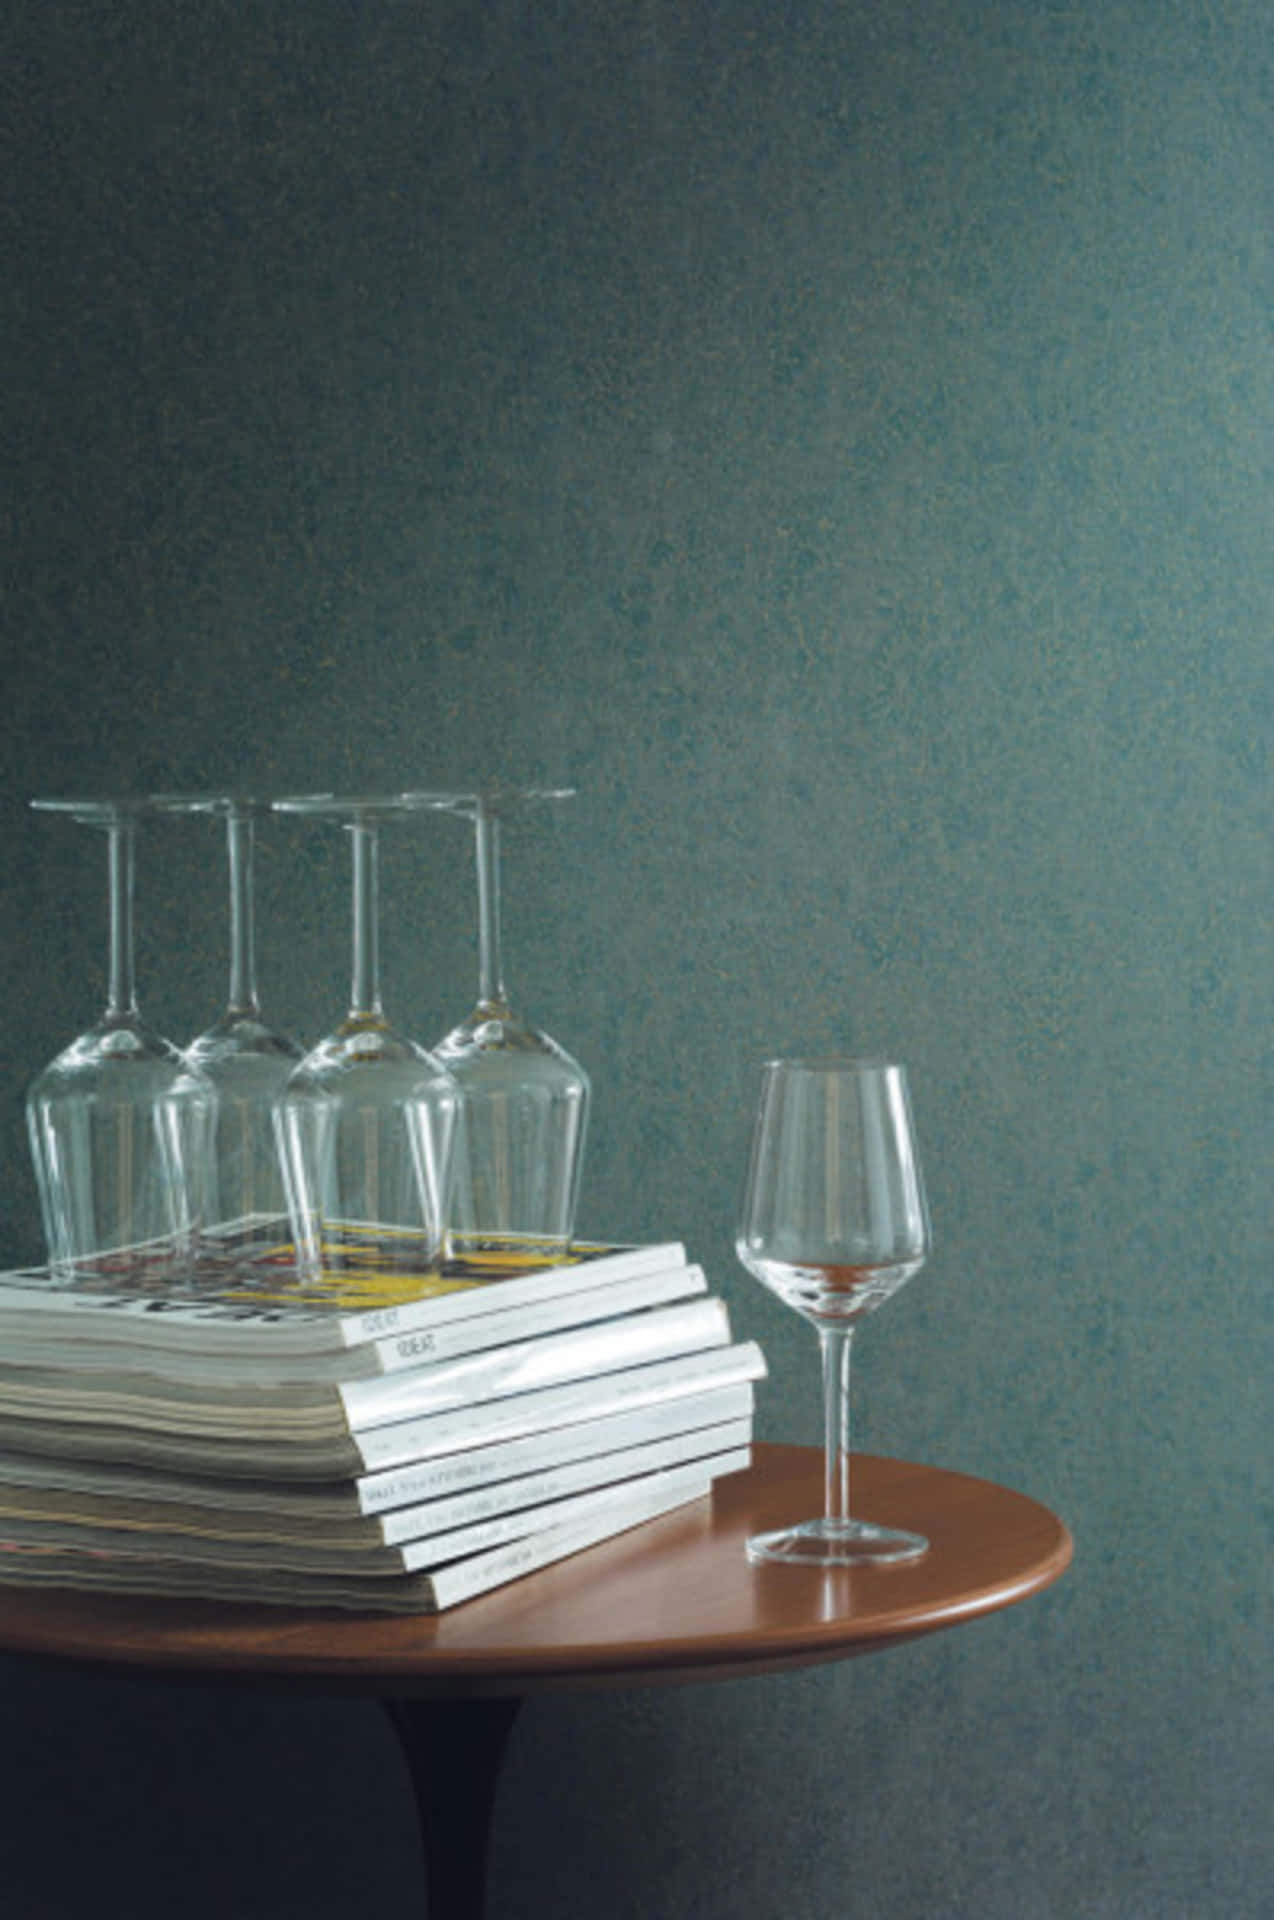 Dandy Wine Glasses Wallpaper